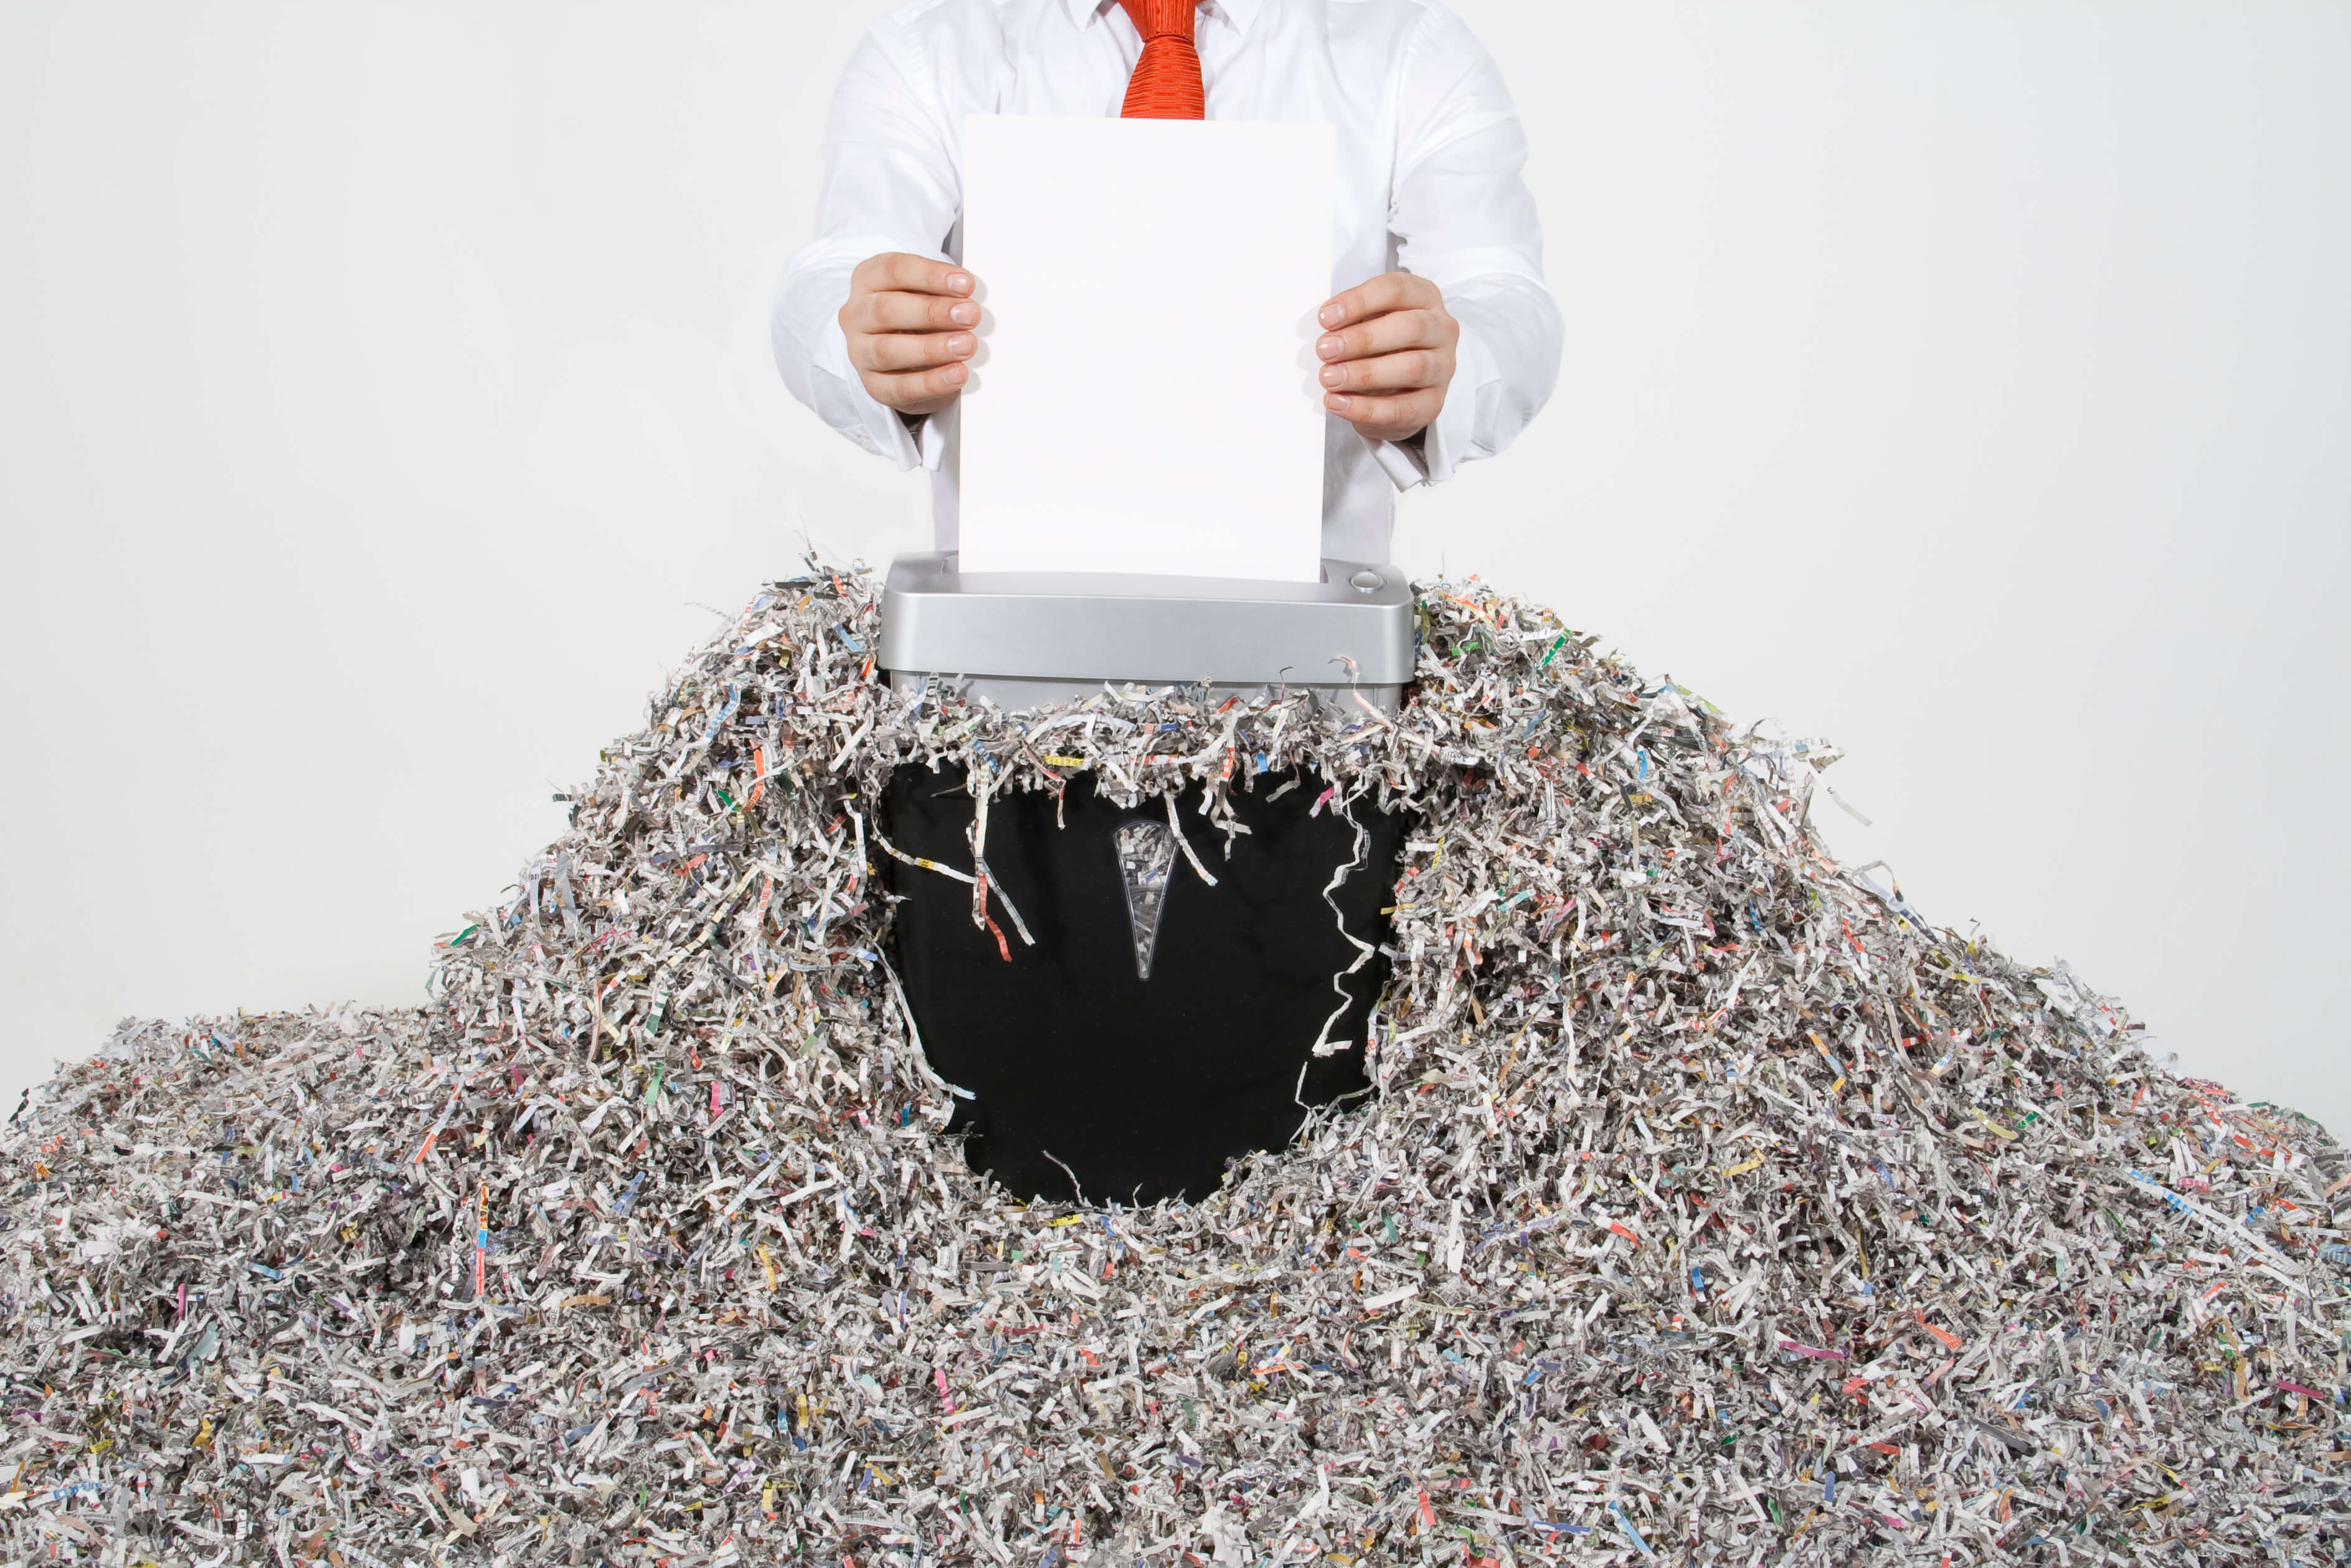 document shredding